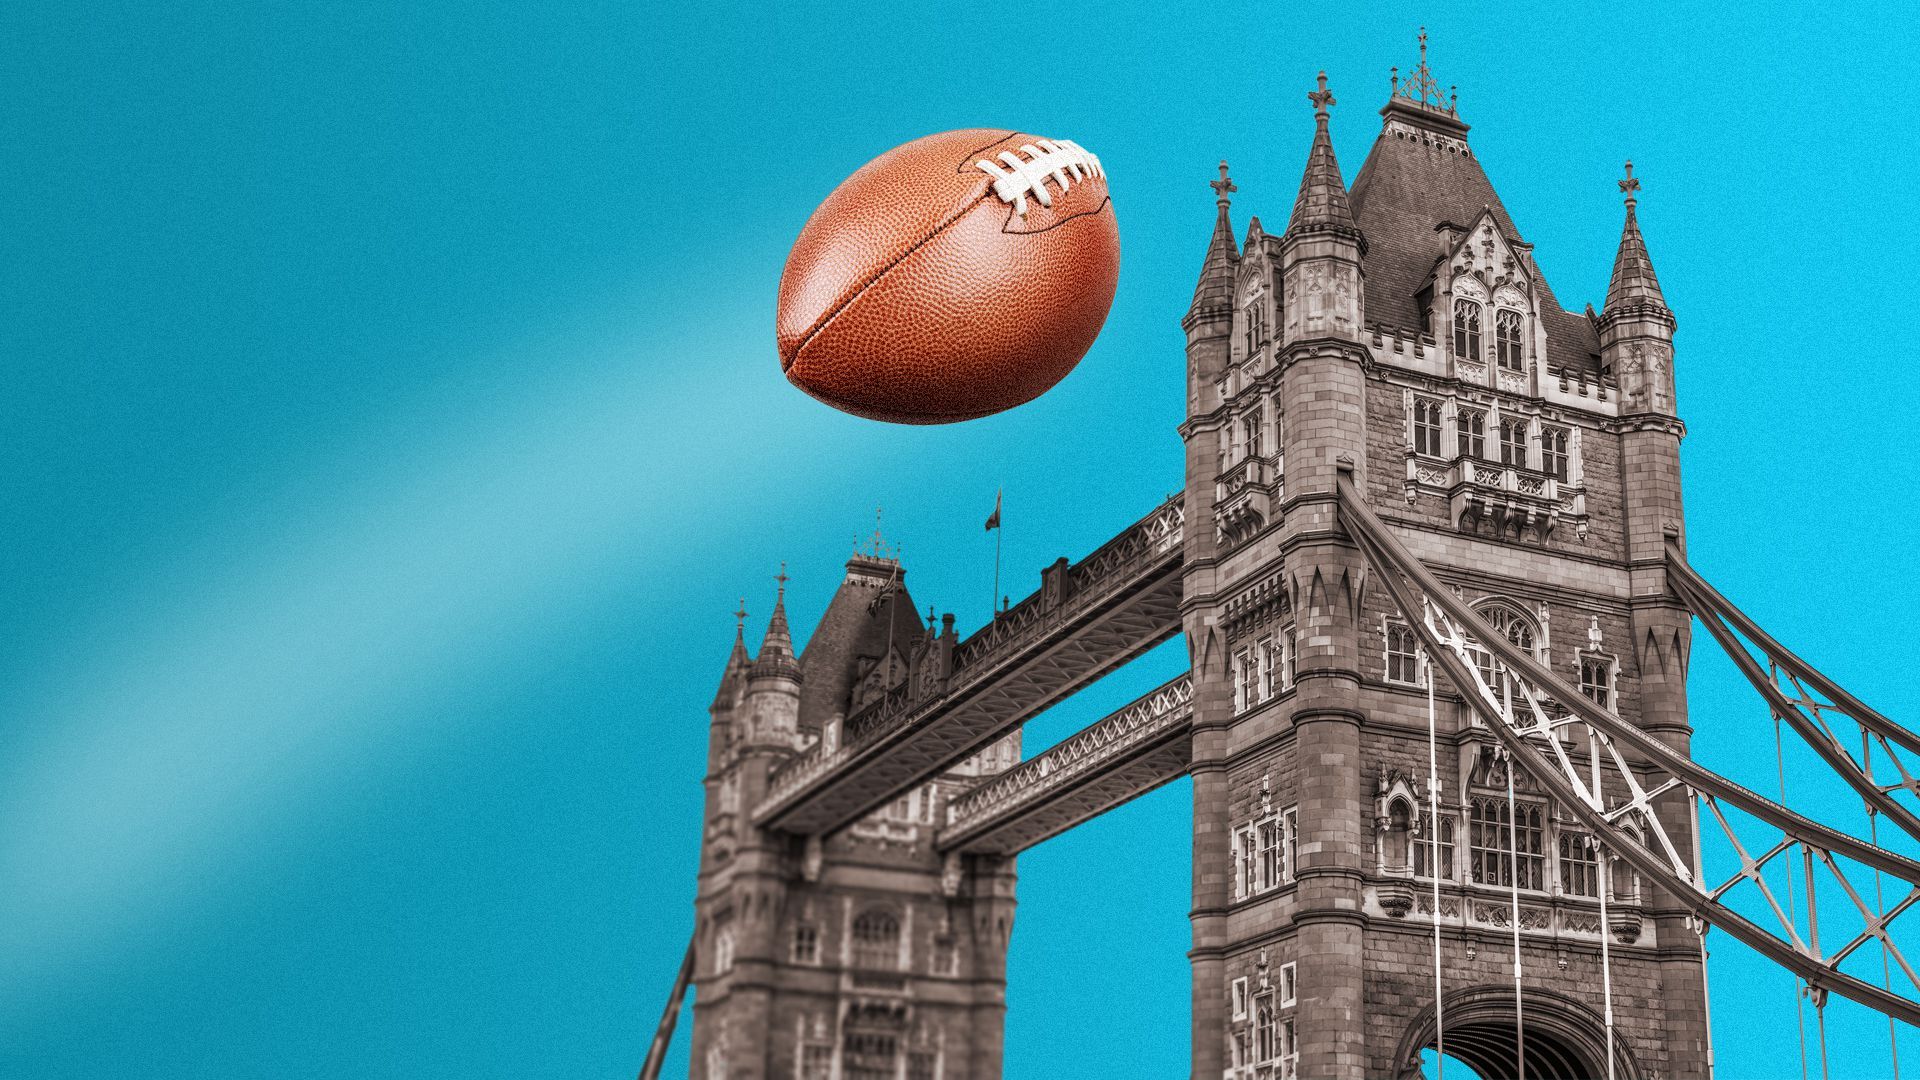 Illustration of a football soaring over London's Tower Bridge